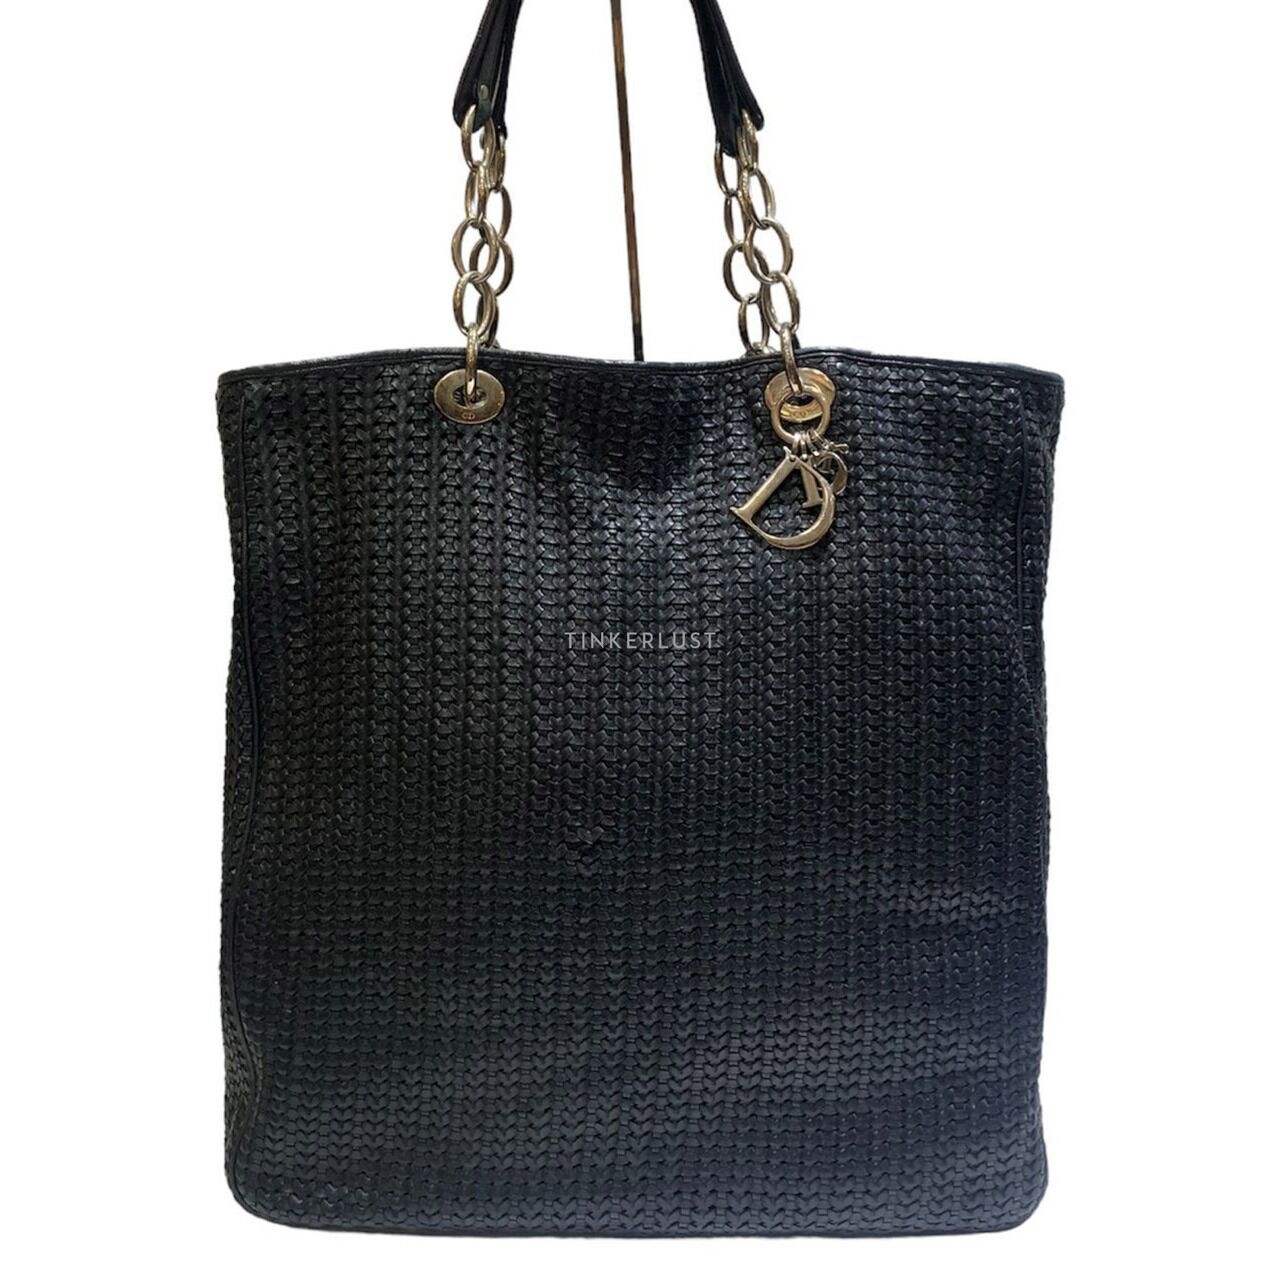 Christian Dior Leather Black SHW 2008 Tote Bag